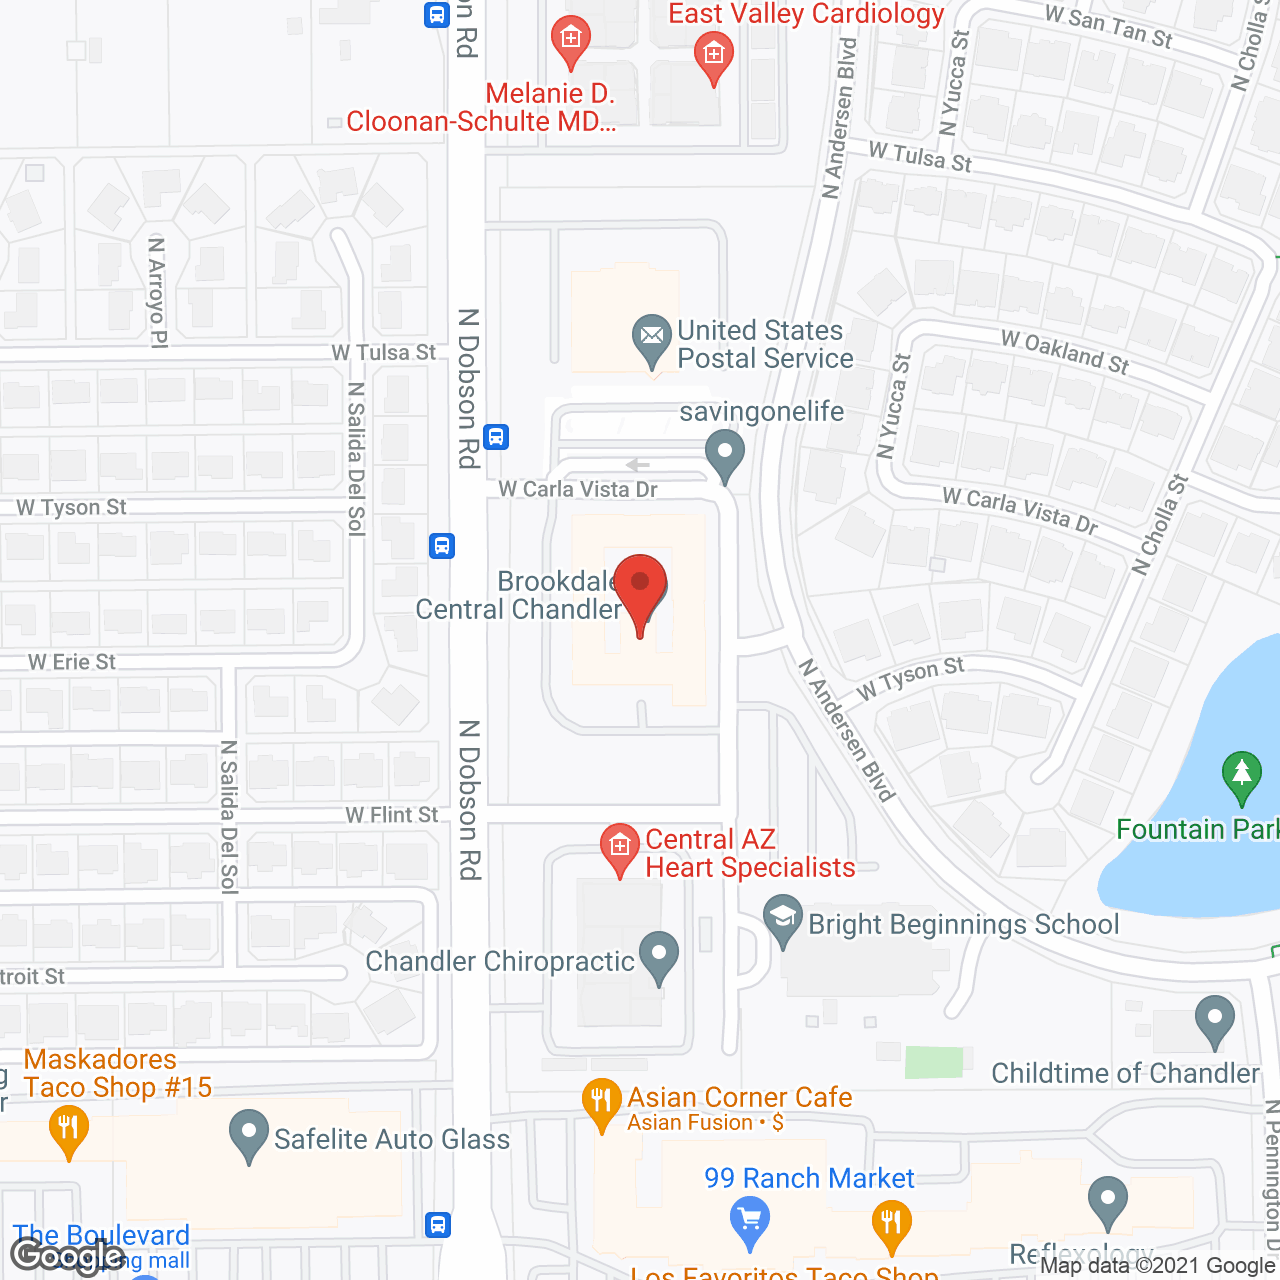 Marriott's Village Oaks at Chandler in google map